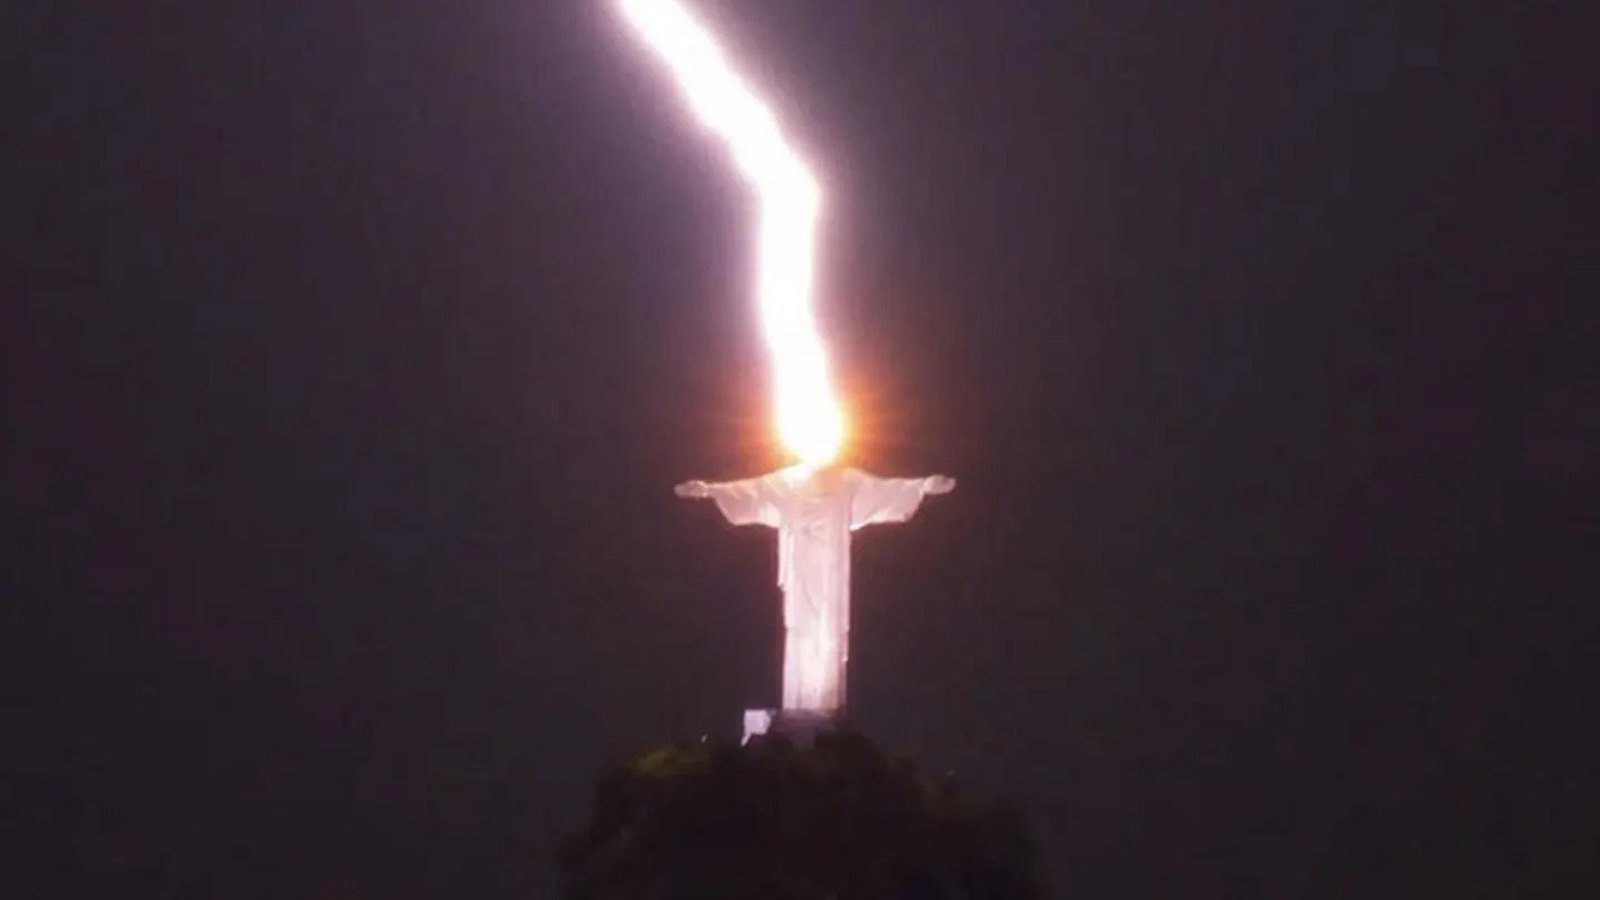 lightning-strikes-christ-the-redeemer-statue